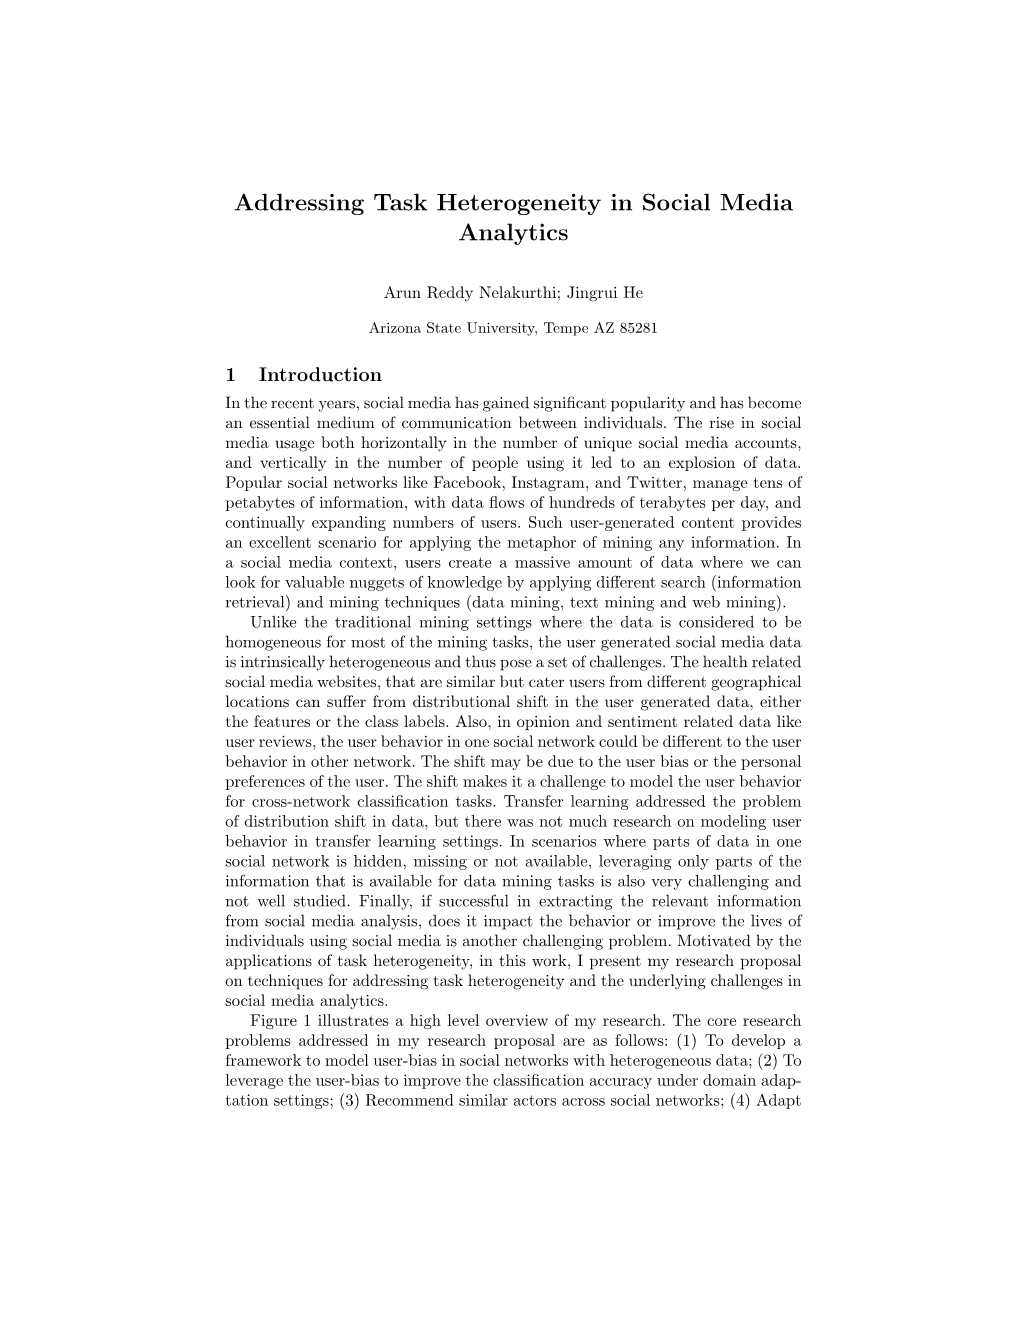 Addressing Task Heterogeneity in Social Media Analytics